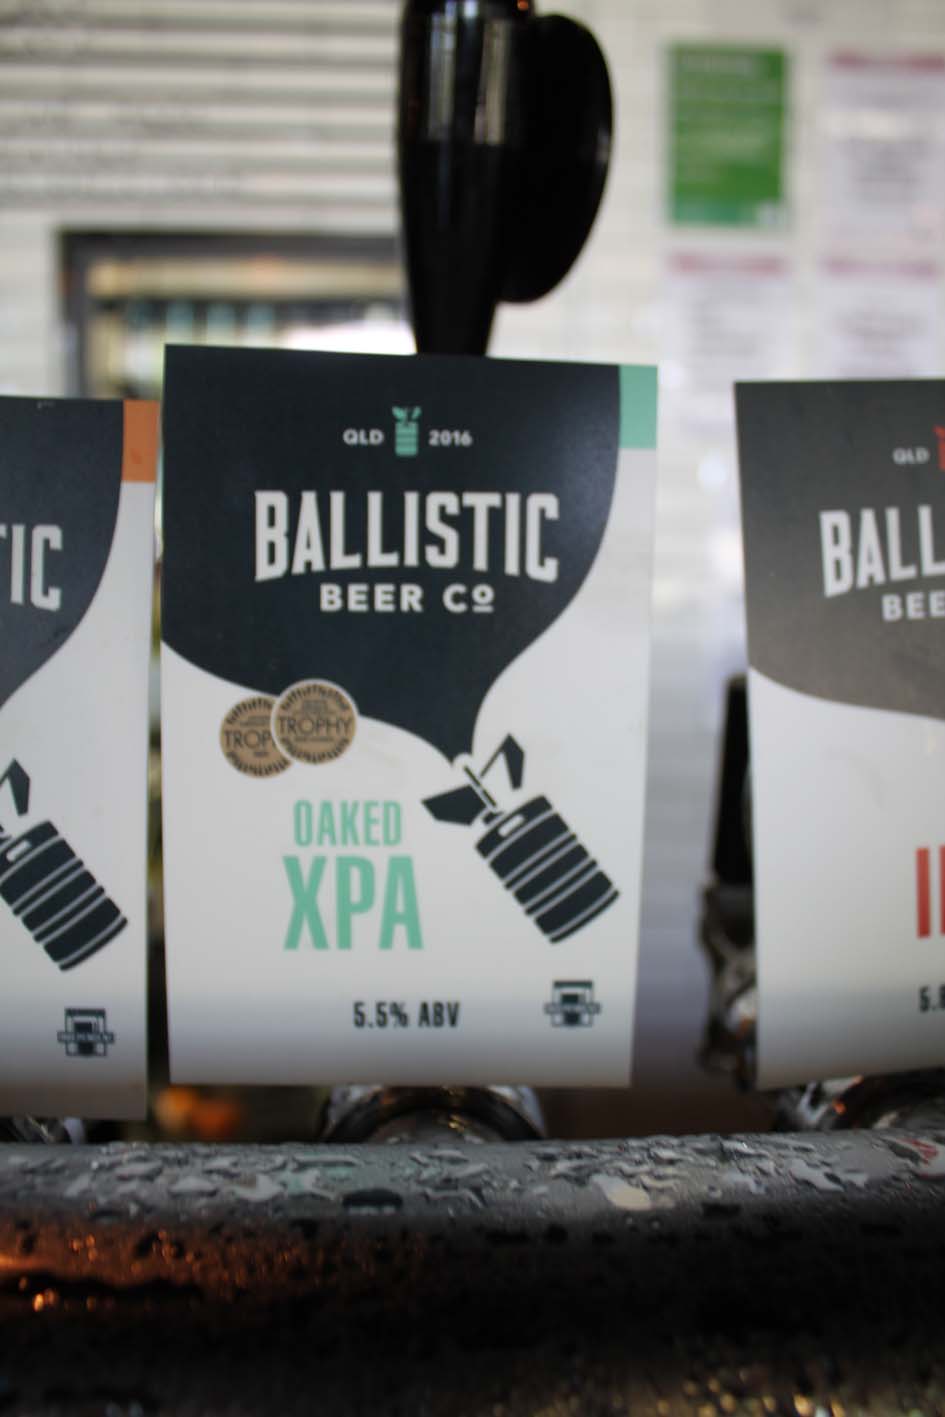 Ballistic Springfield's tap offerings include award winning beer